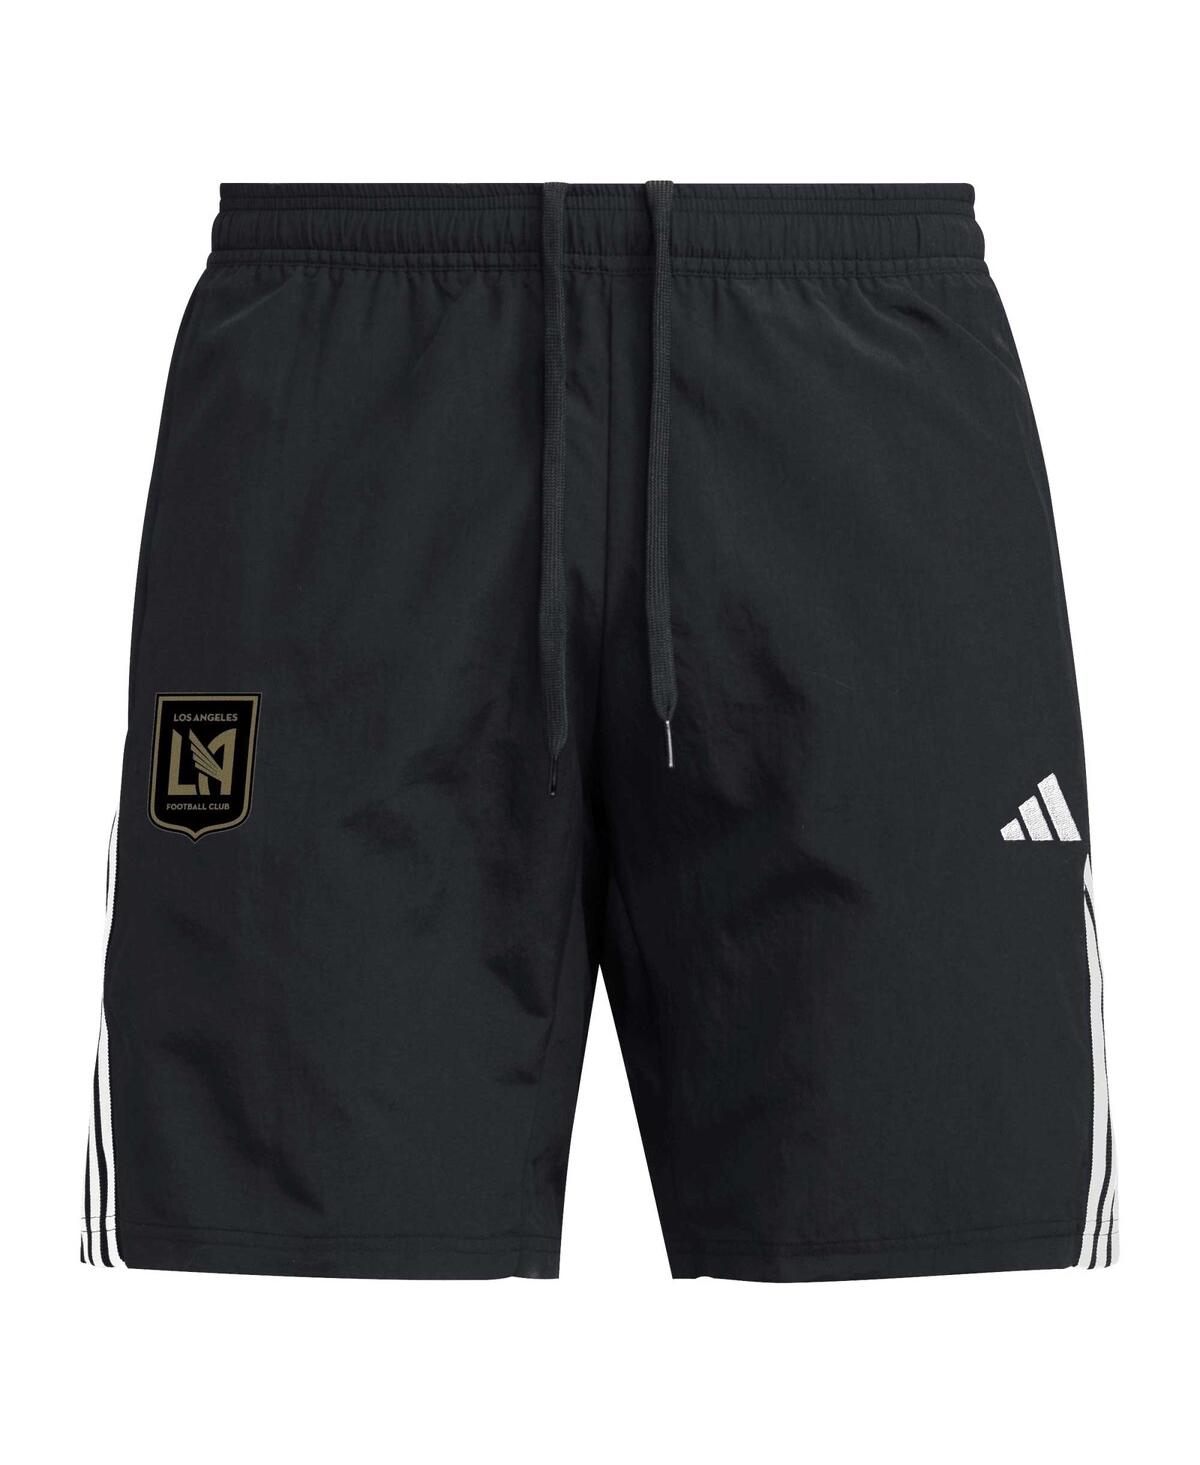 Shop Adidas Originals Men's Adidas Black Lafc Downtime Shorts